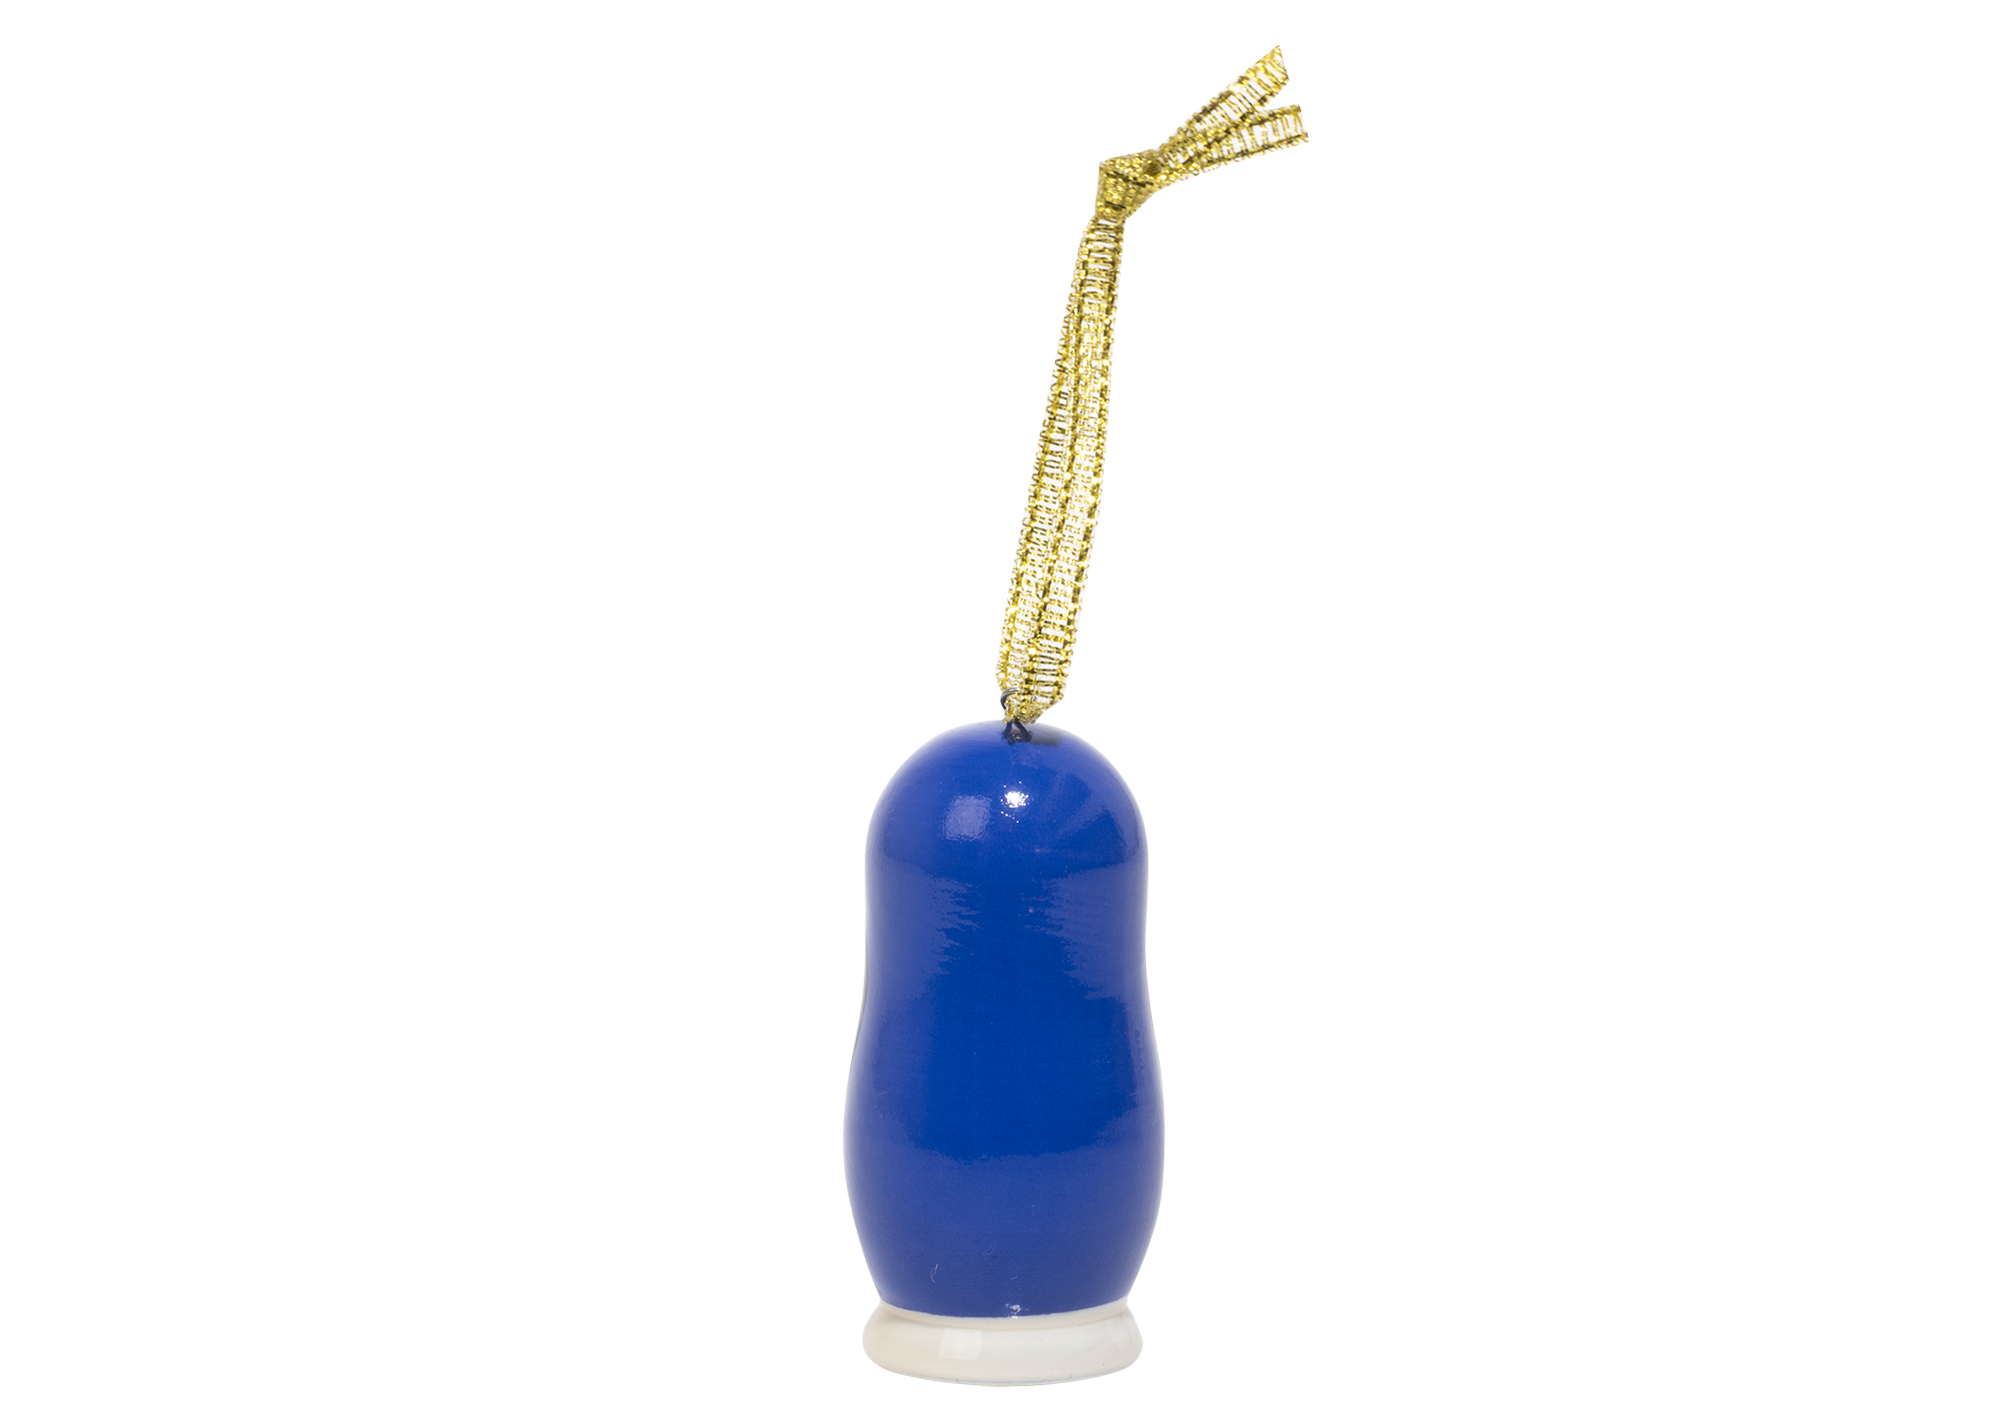 Buy Blue Eskimo Ornament 2" at GoldenCockerel.com